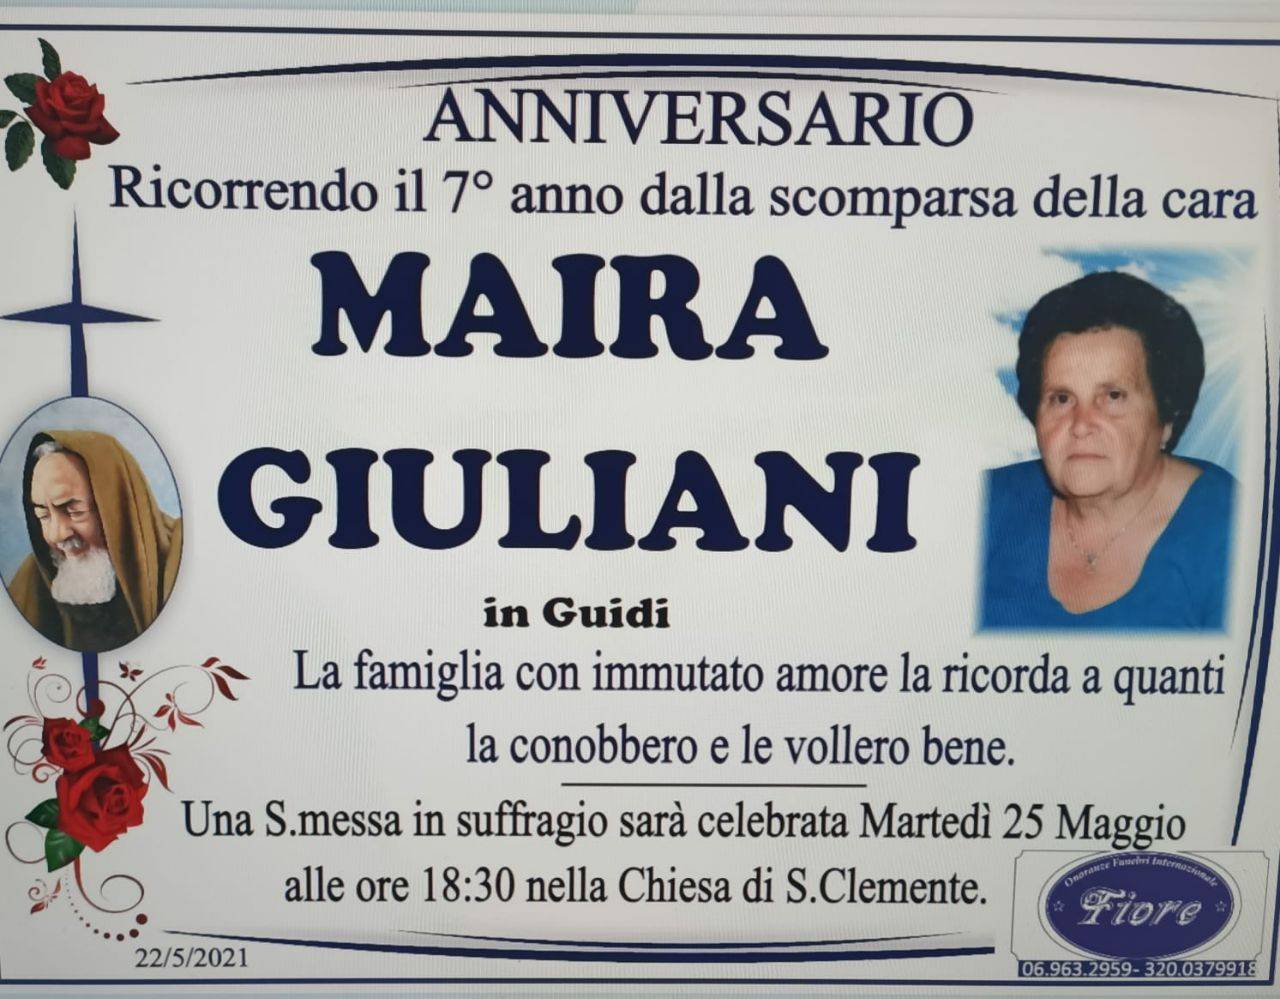 Maira Giuliani